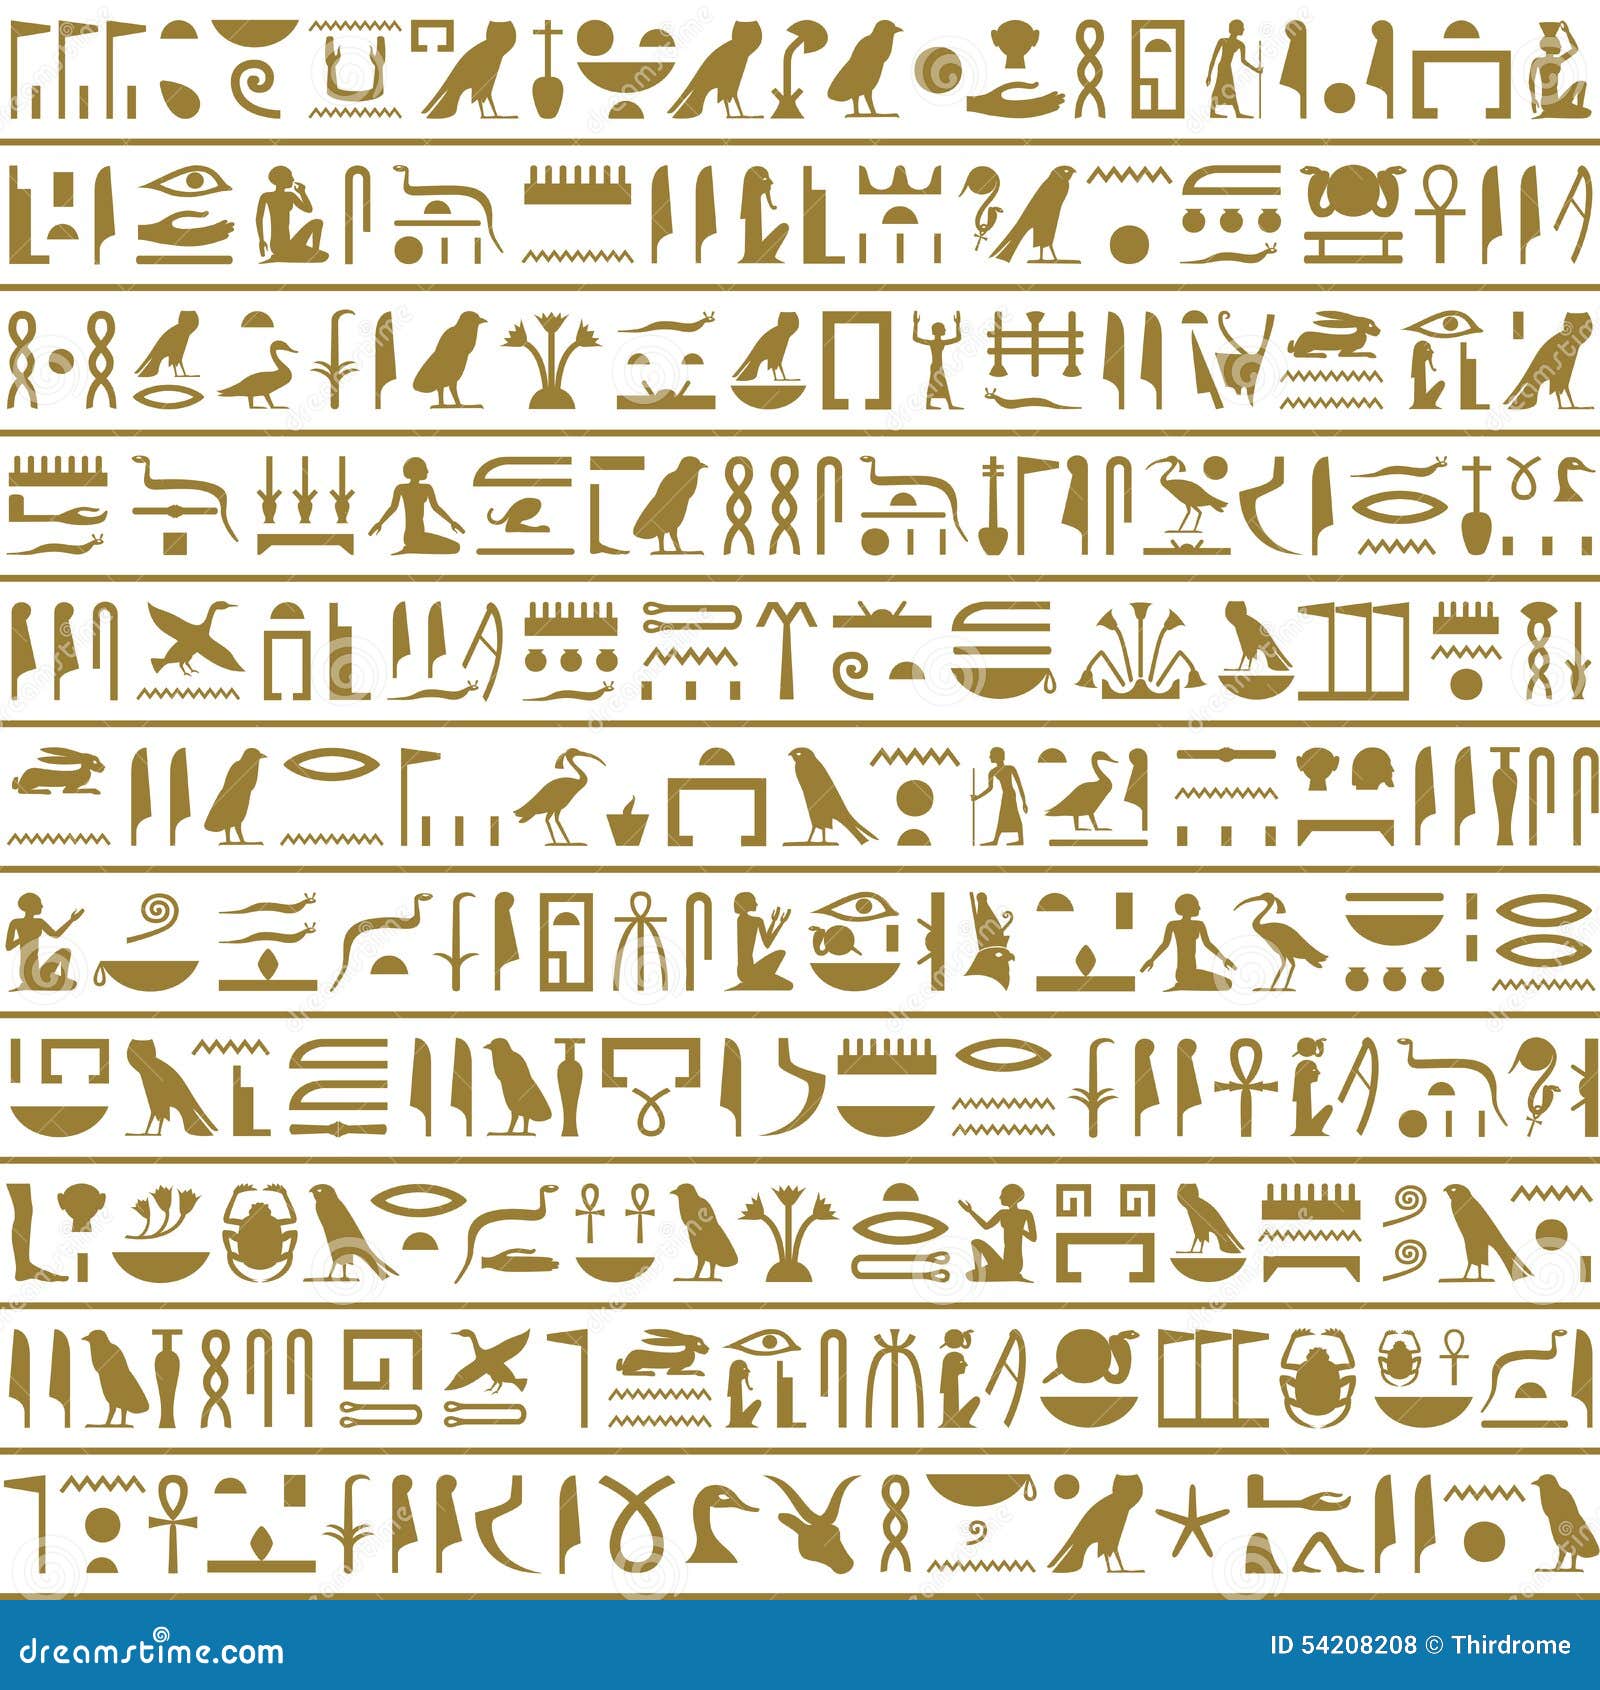 Hieroglyphics phone wallpaper 1080P 2k 4k Full HD Wallpapers  Backgrounds Free Download  Wallpaper Crafter